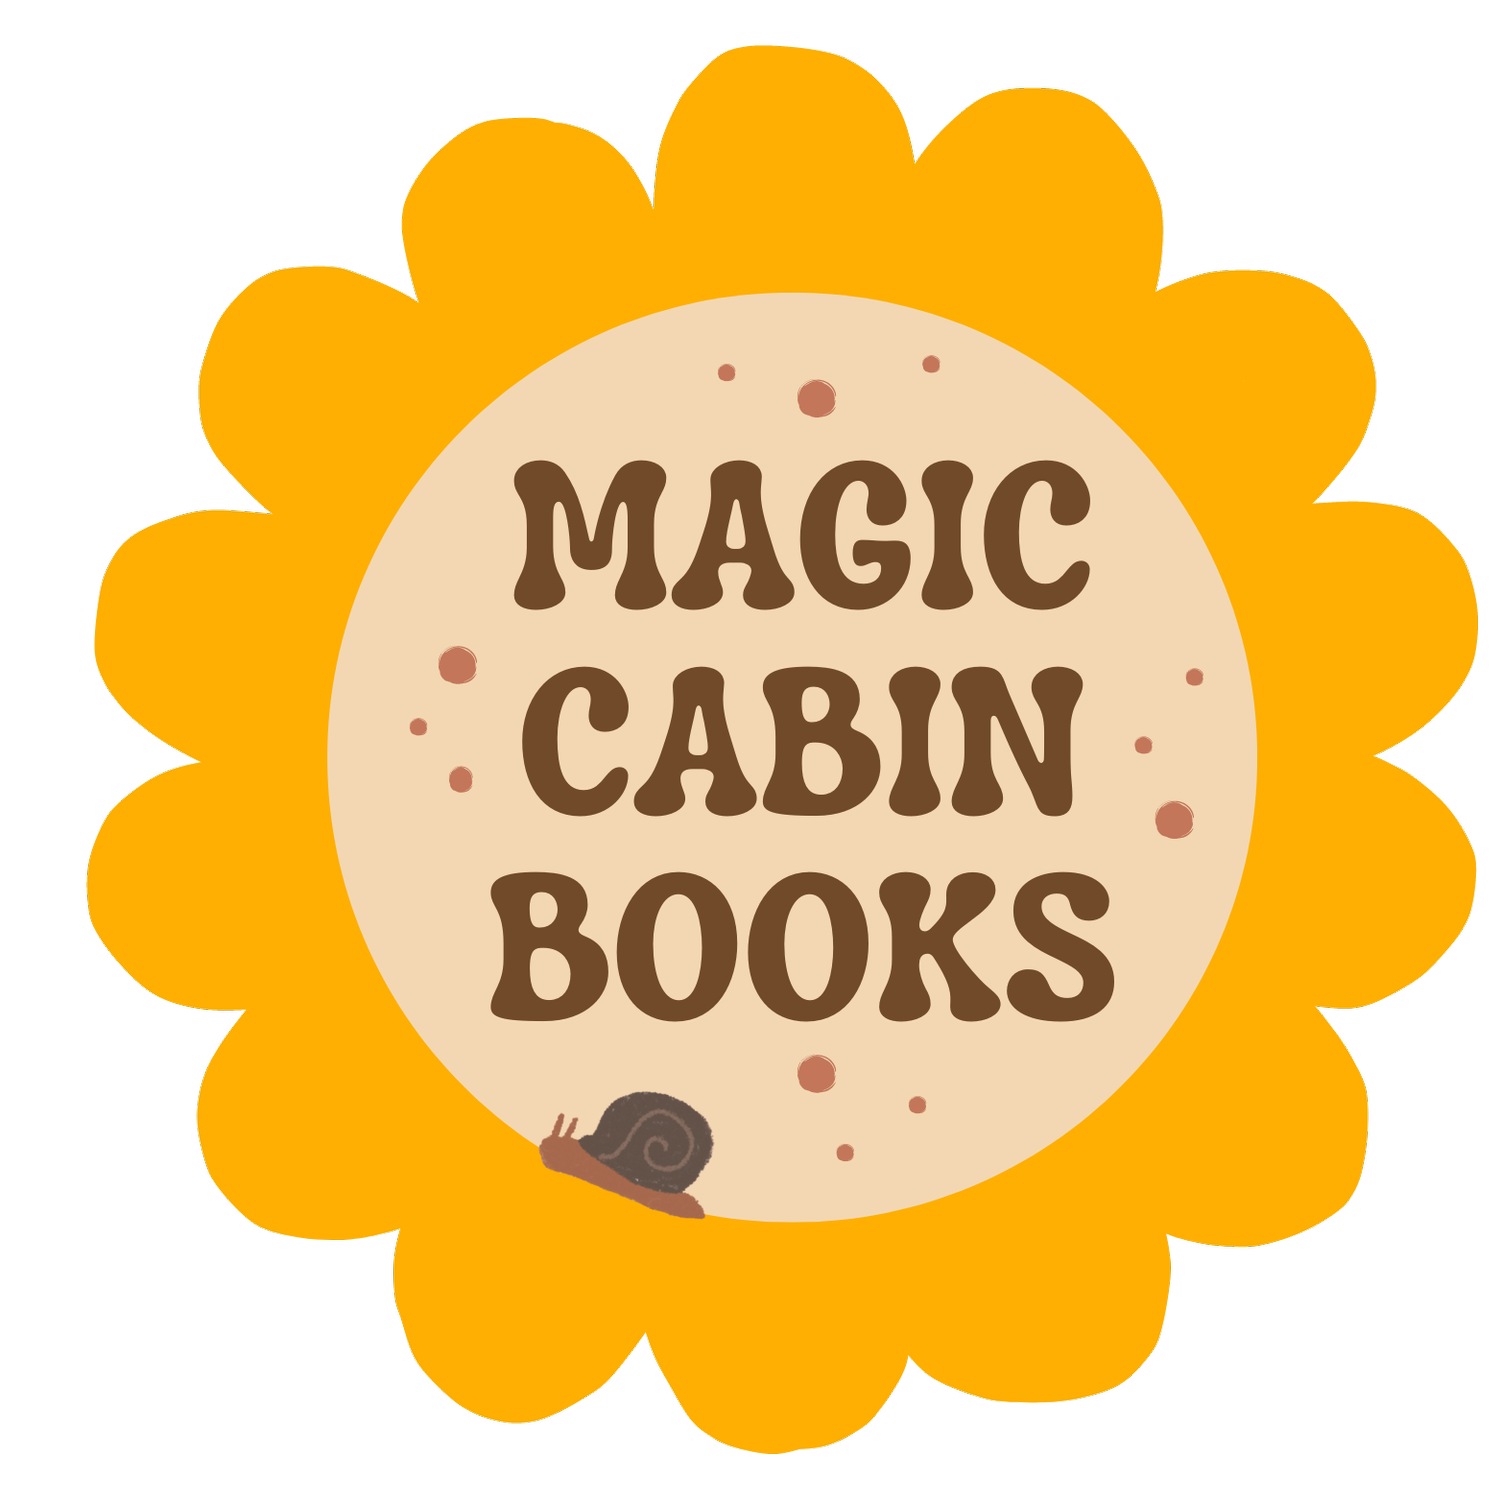 MAGIC CABIN BOOKS